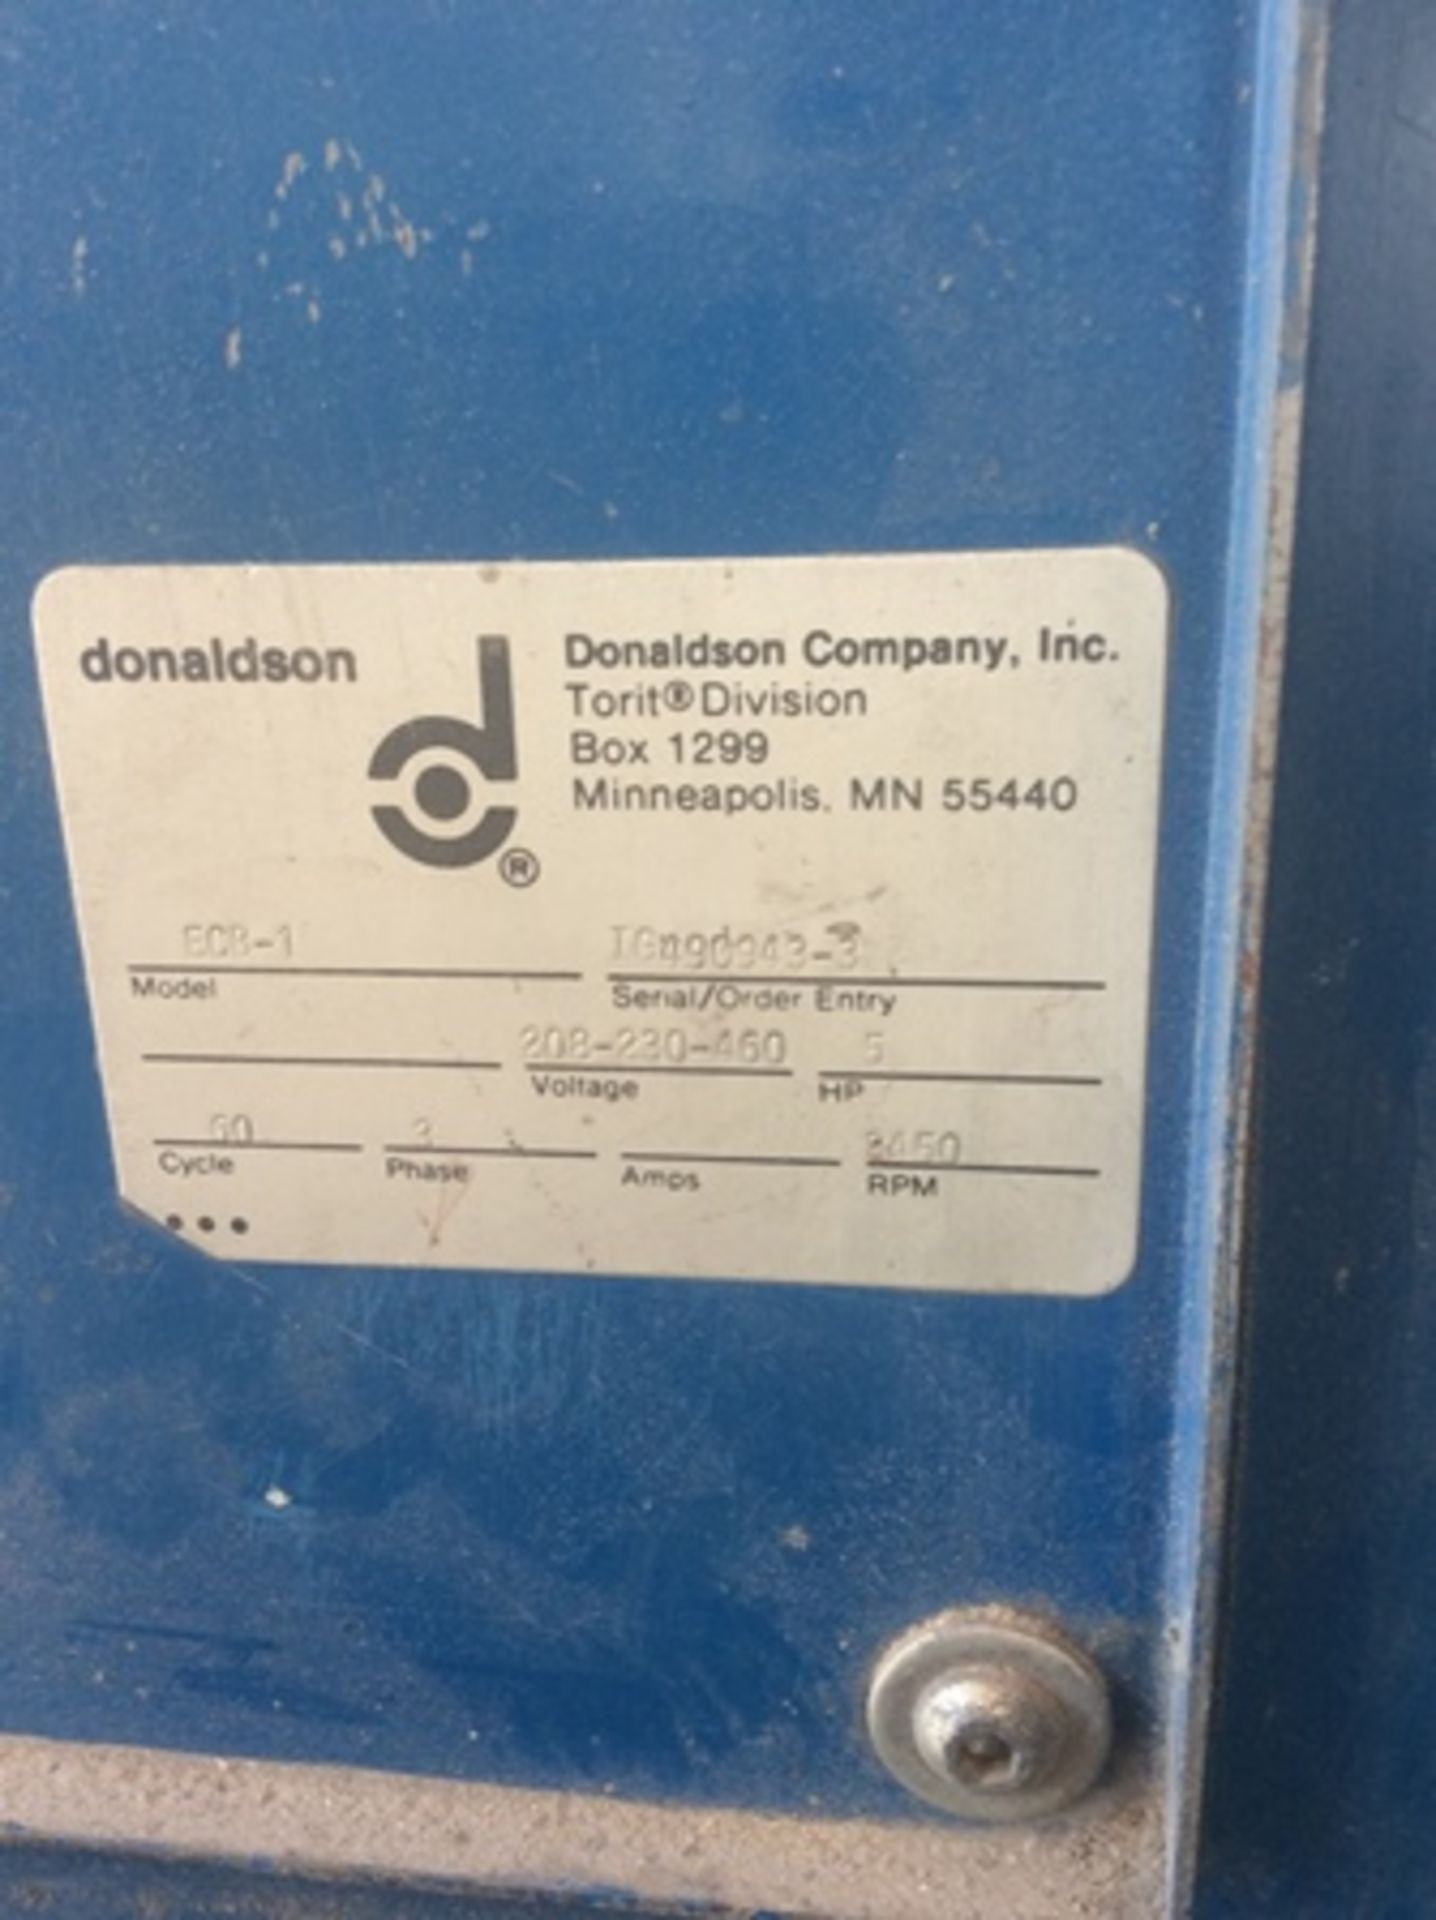 colector de polvo sin extractor marca: donaldson torit; modelo: ecb-1; serie:tg49c943-3; potencia:5 - Image 6 of 6